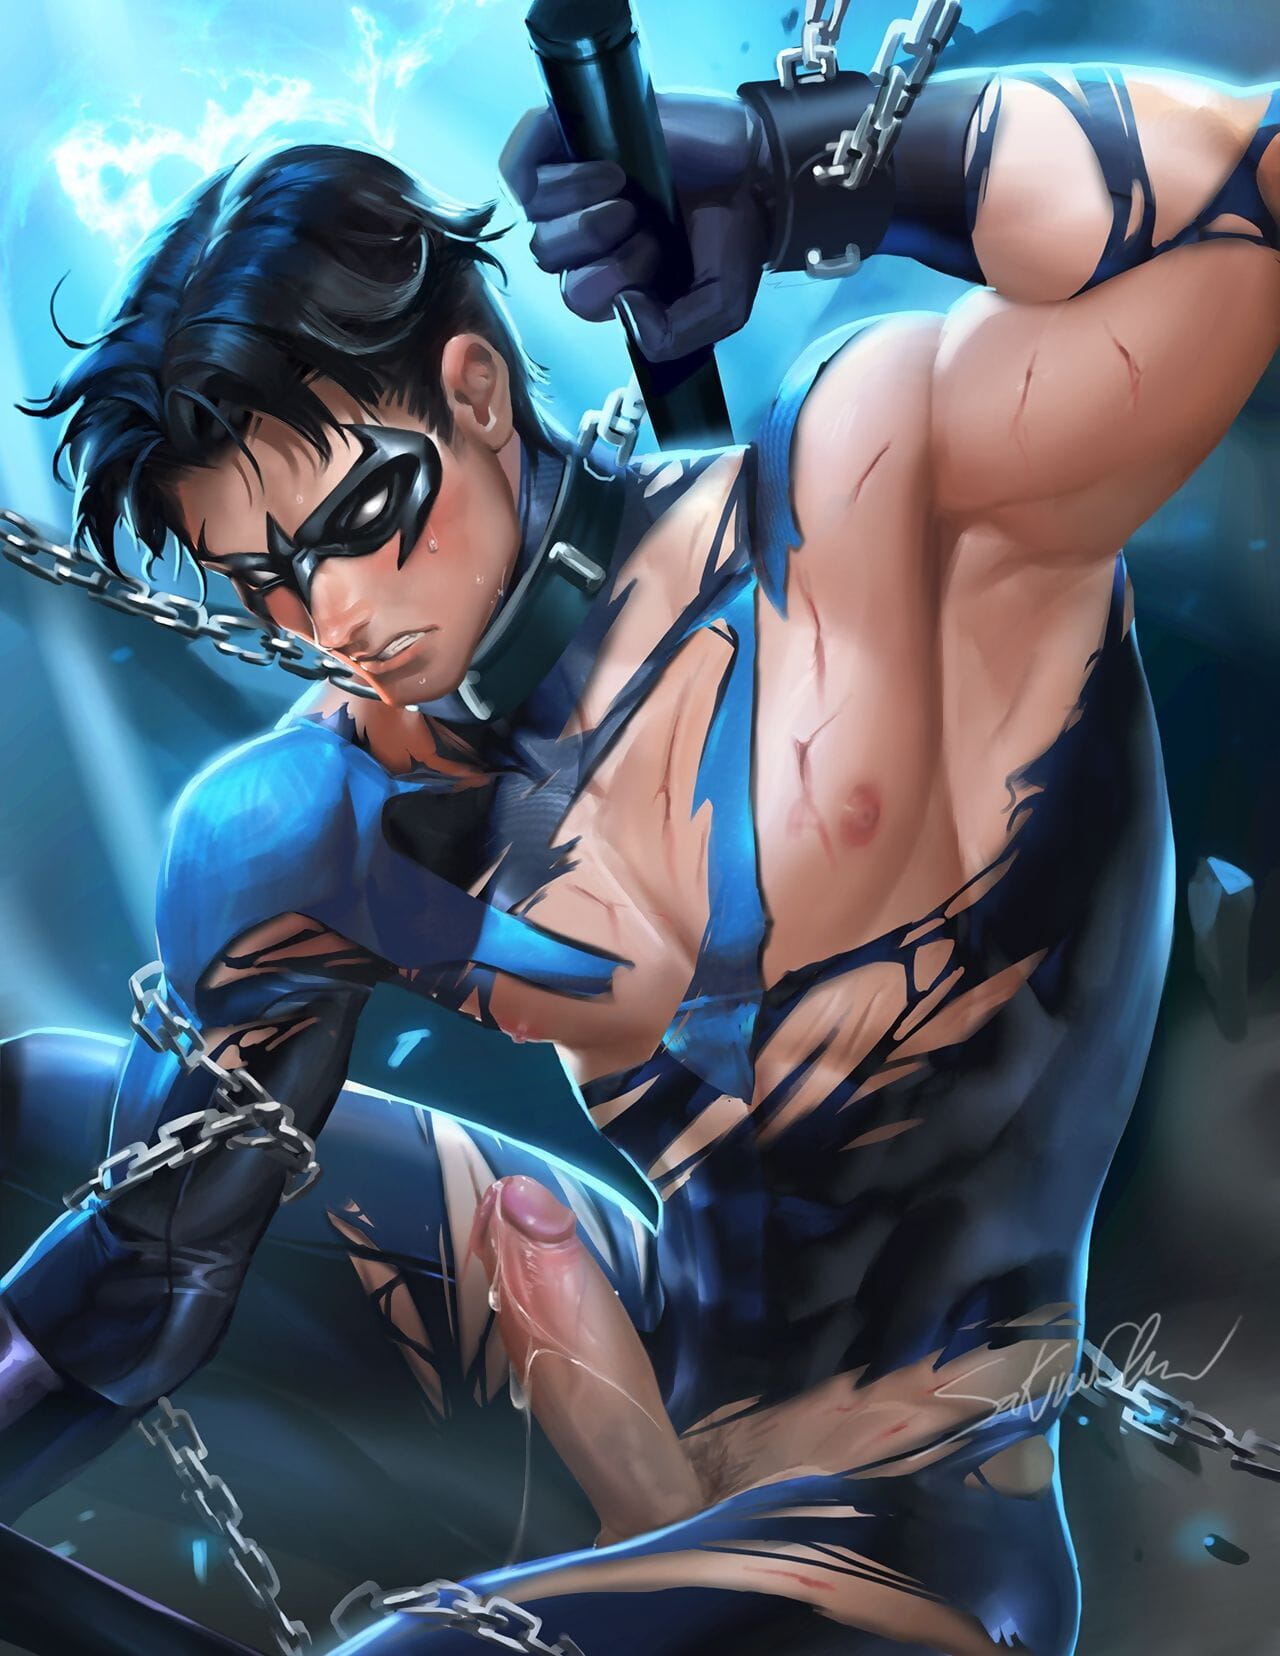 Nightwing/Dick Grayson